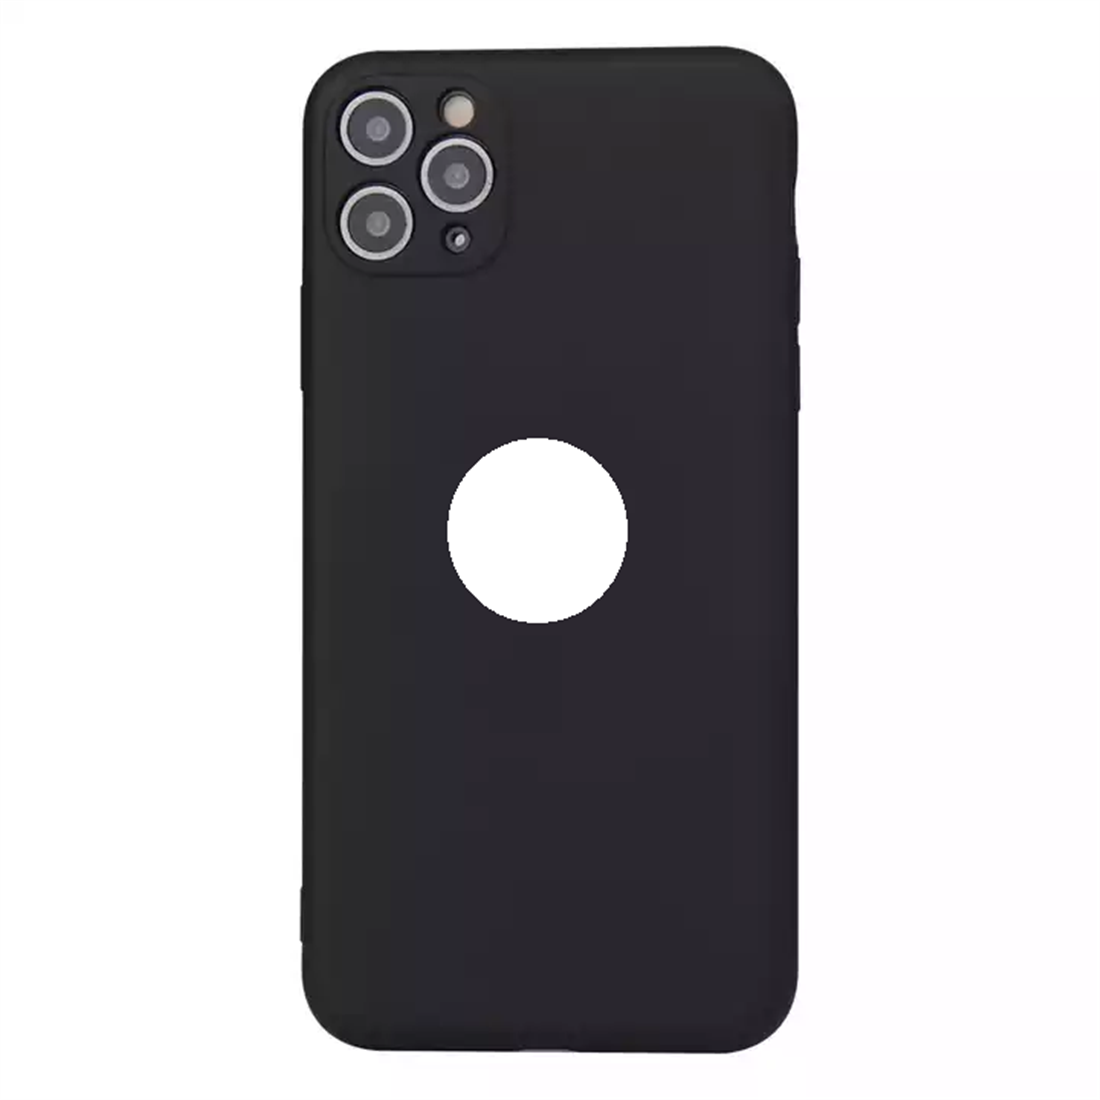 Apple iPhone 11 Pro PU Black Back Cover Smartphone Case